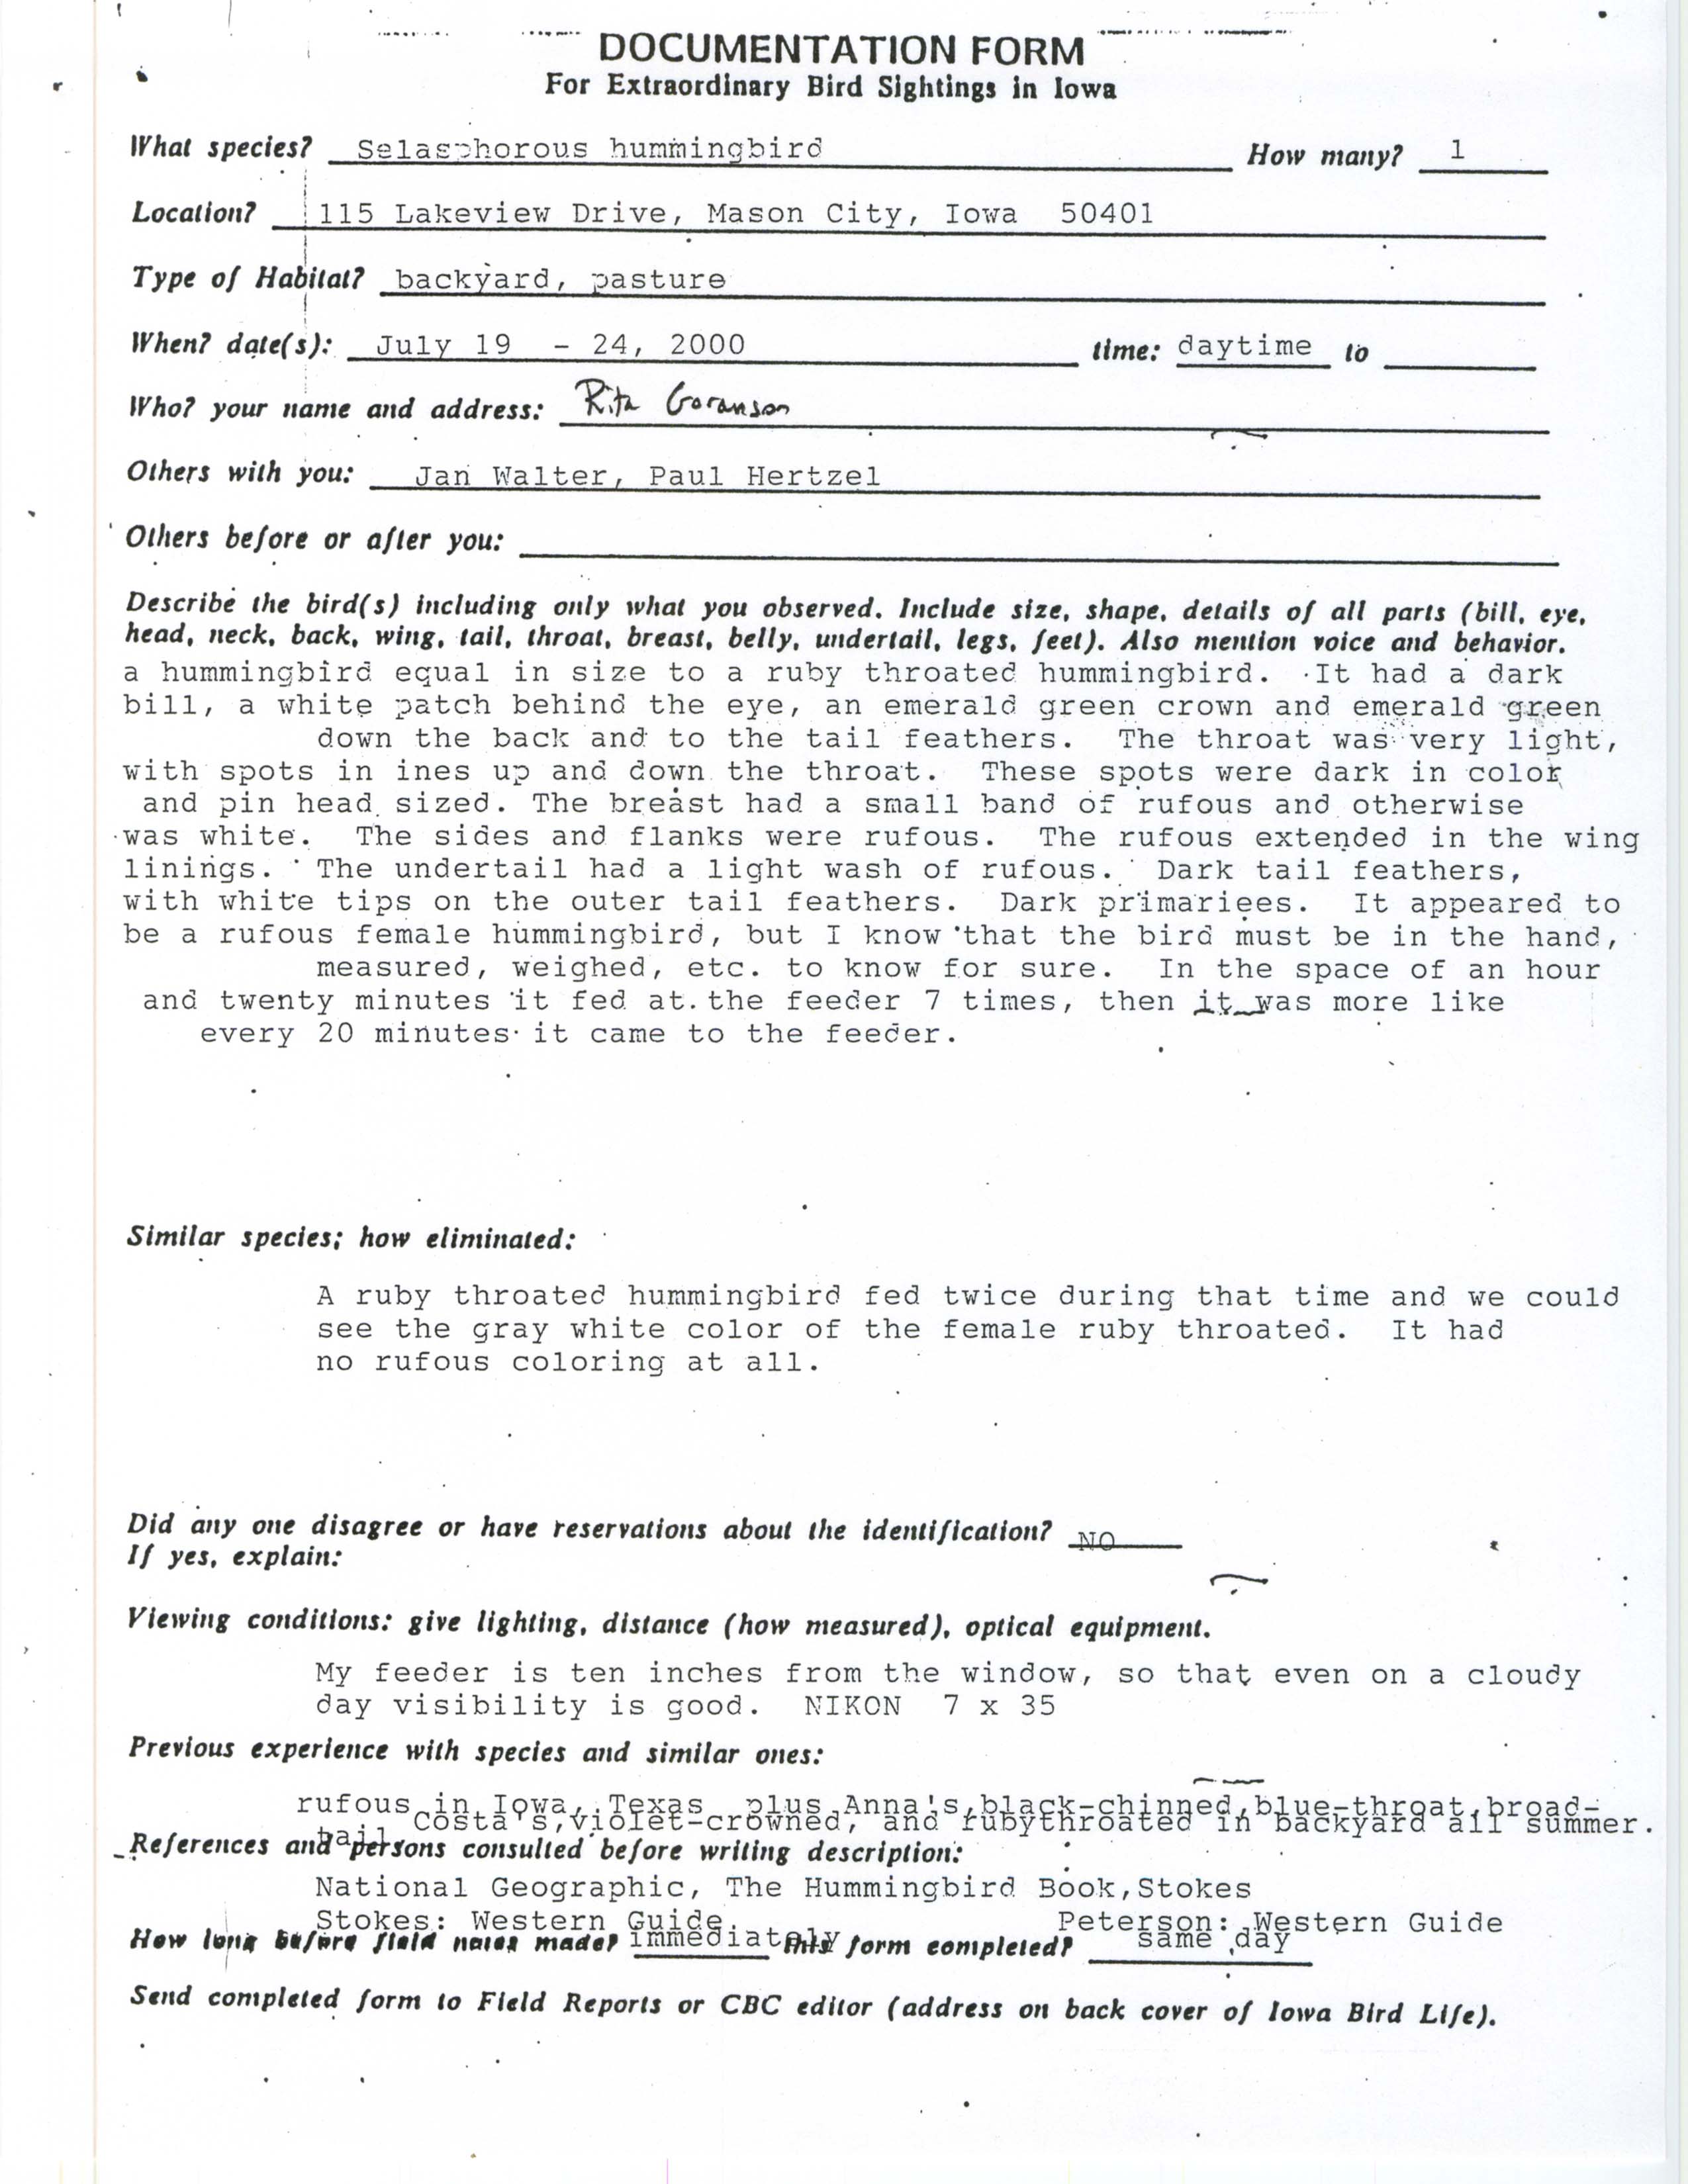 Documentation form for extraordinary bird sightings in Iowa, Selasphorus hummingbird, Rita Goranson, July 19-24, 2000